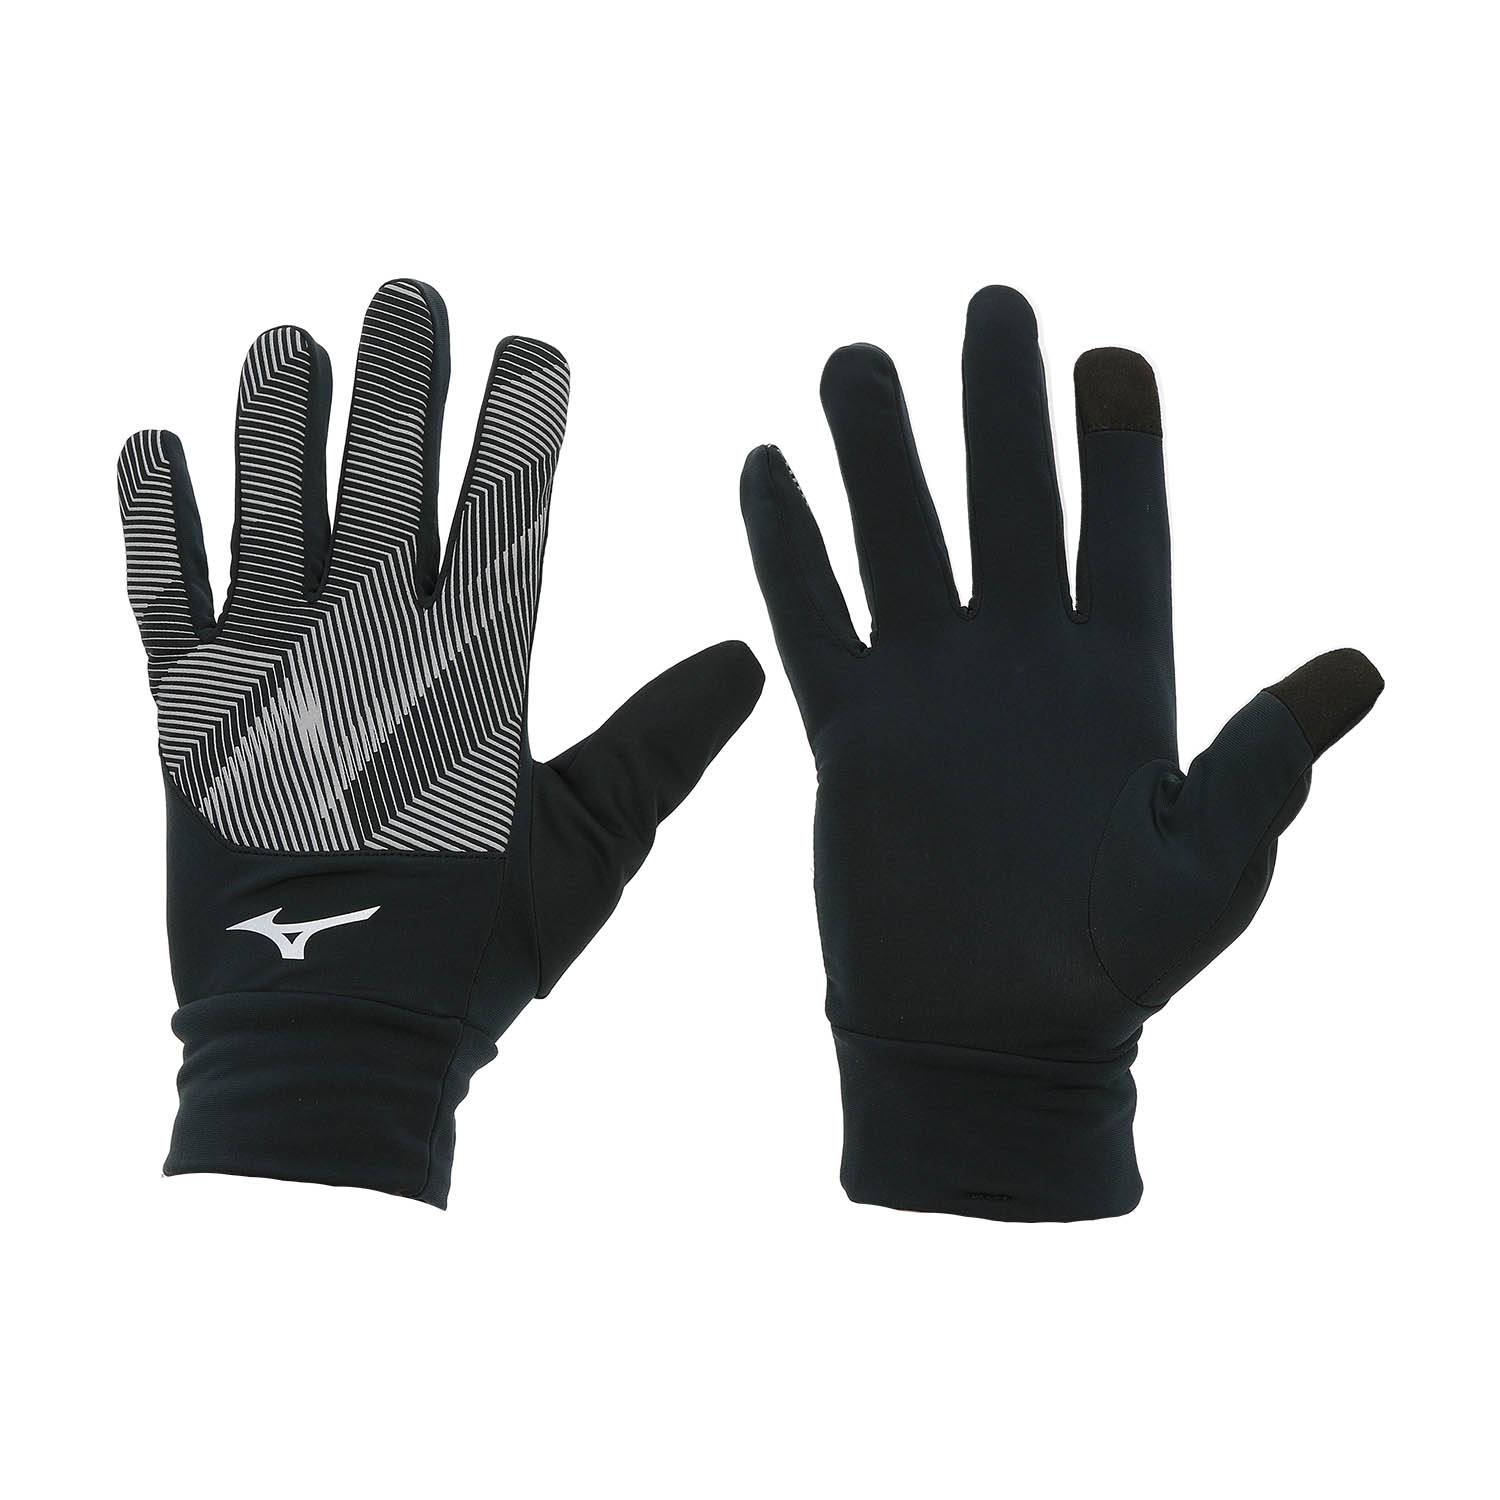 Mizuno Logo Gloves - Black